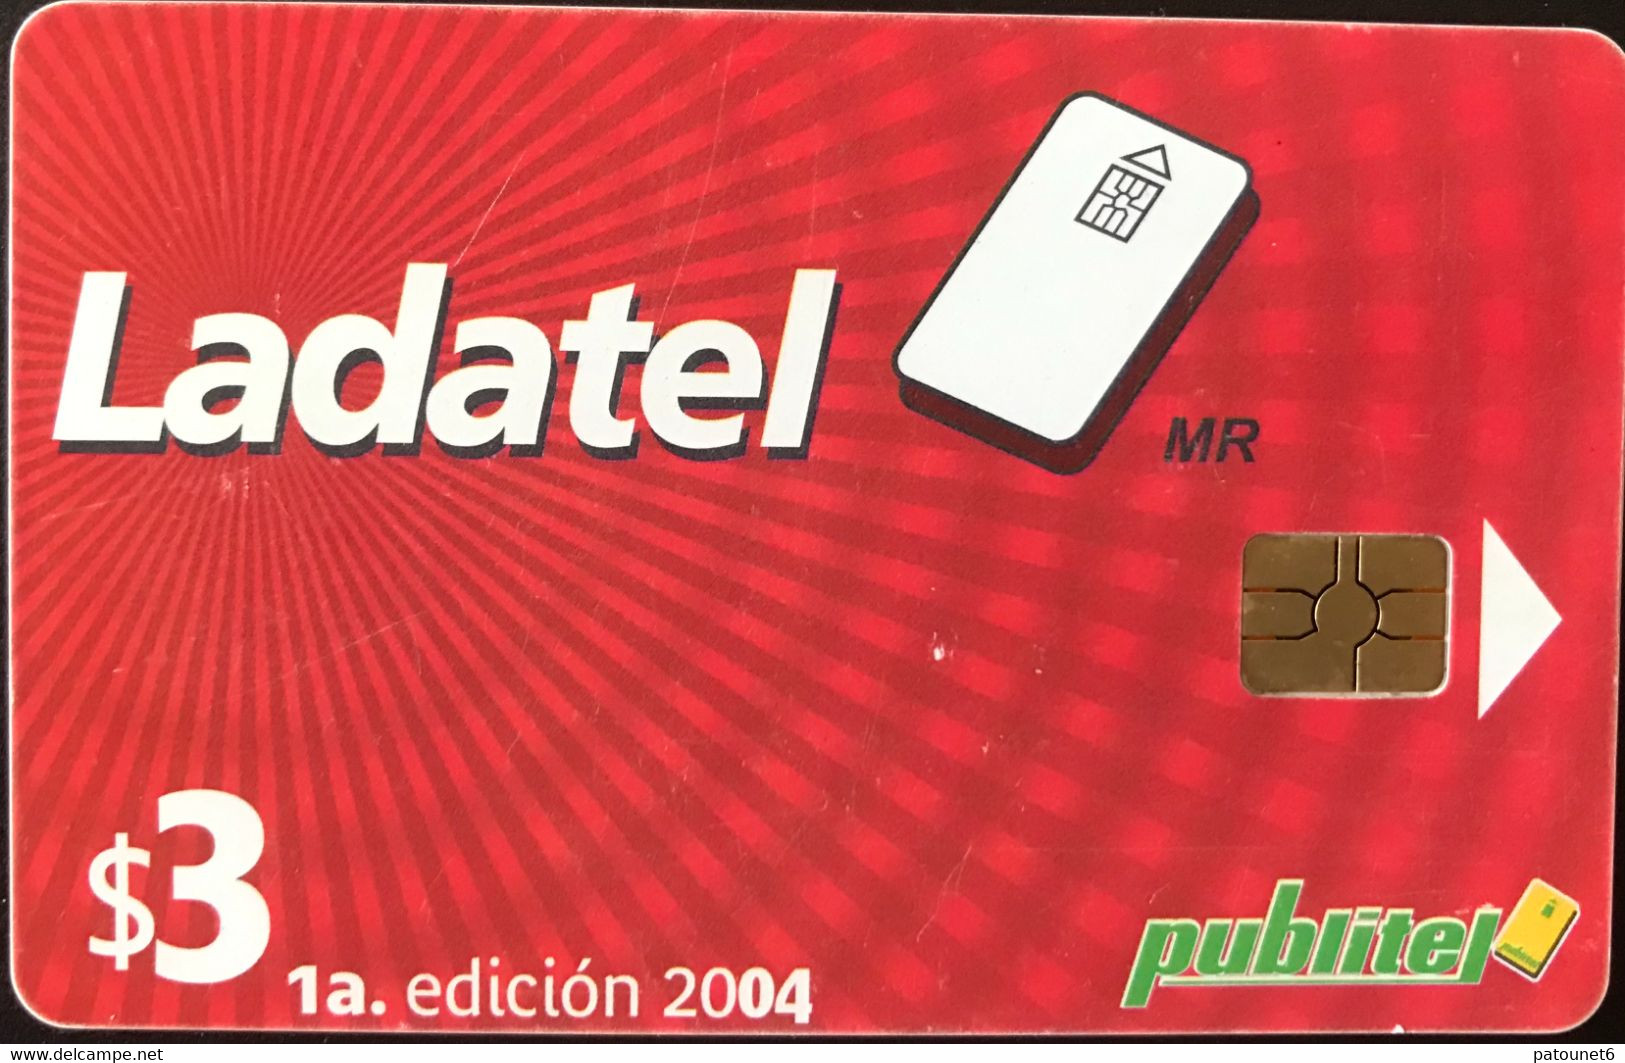 SALVADOR  -  Phonecard  -  Publitel  -  Ladatel -  $ 3 - El Salvador